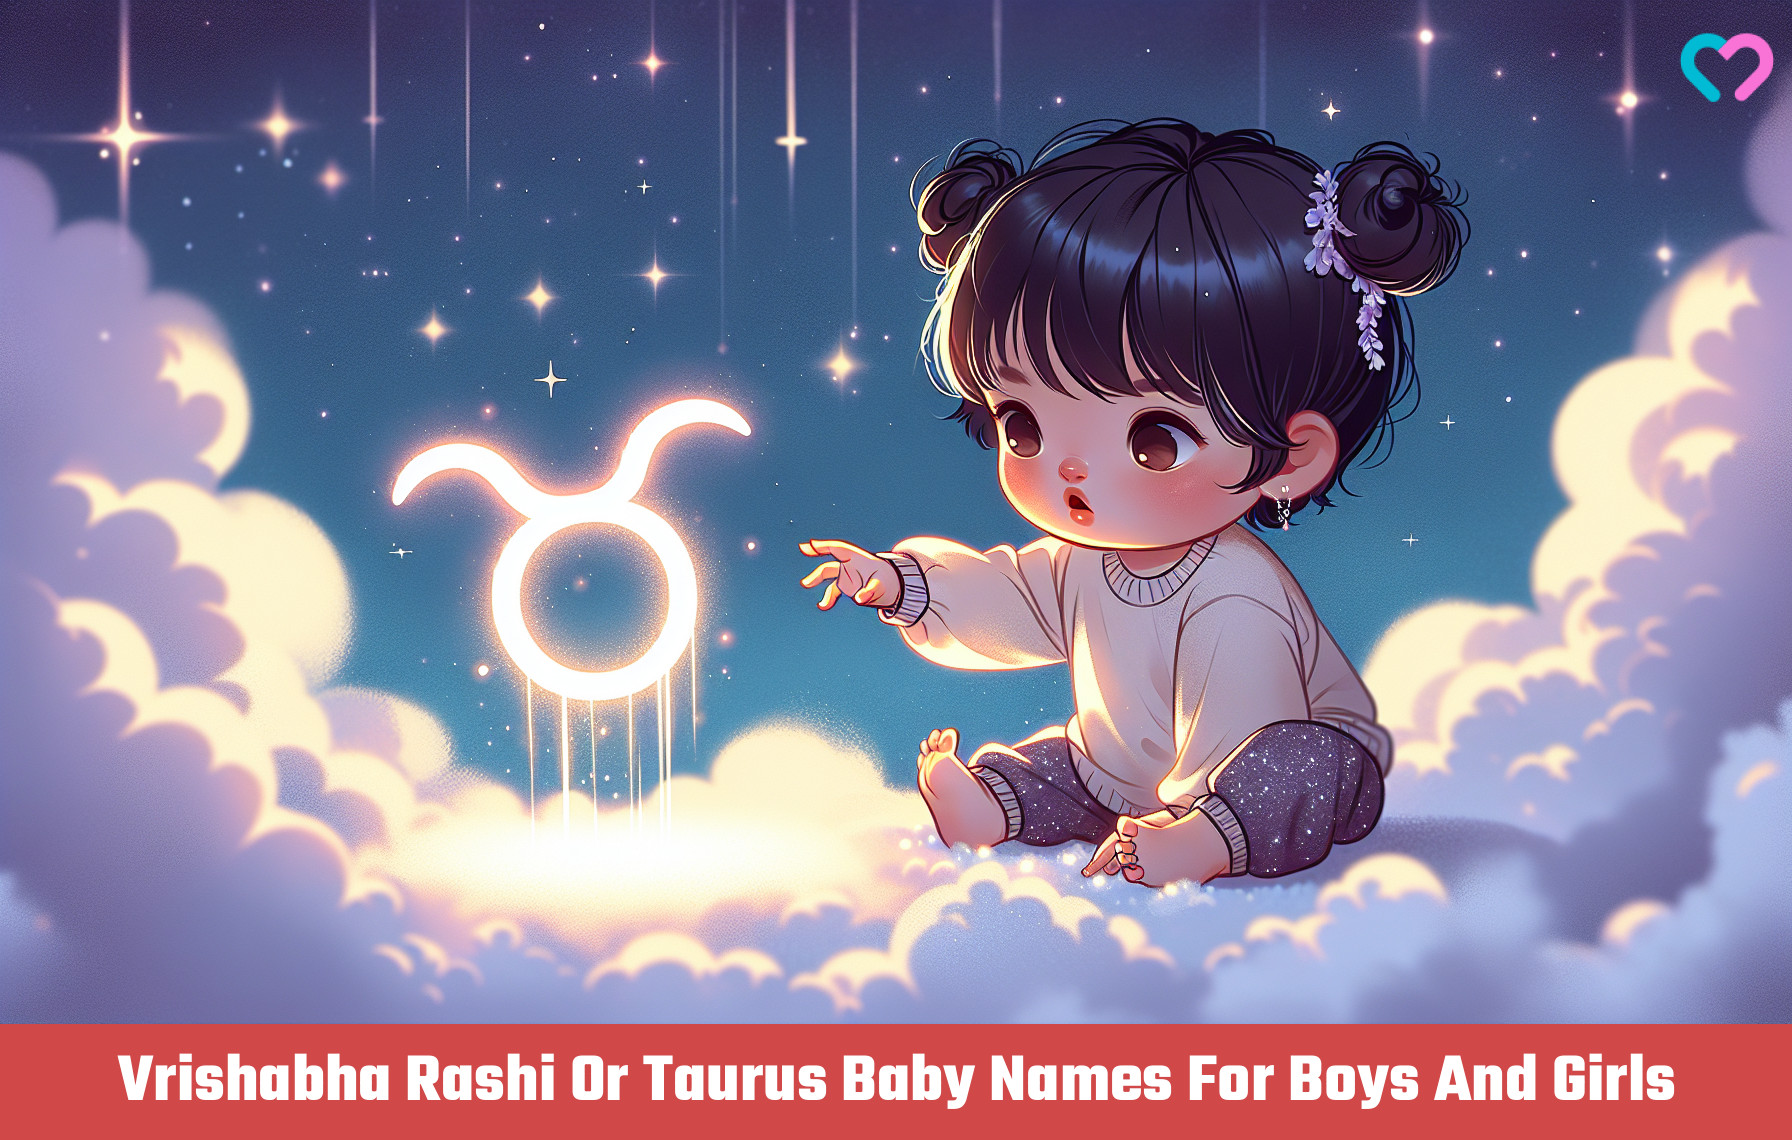 Vrishabha rashi names for boys and girls_illustration